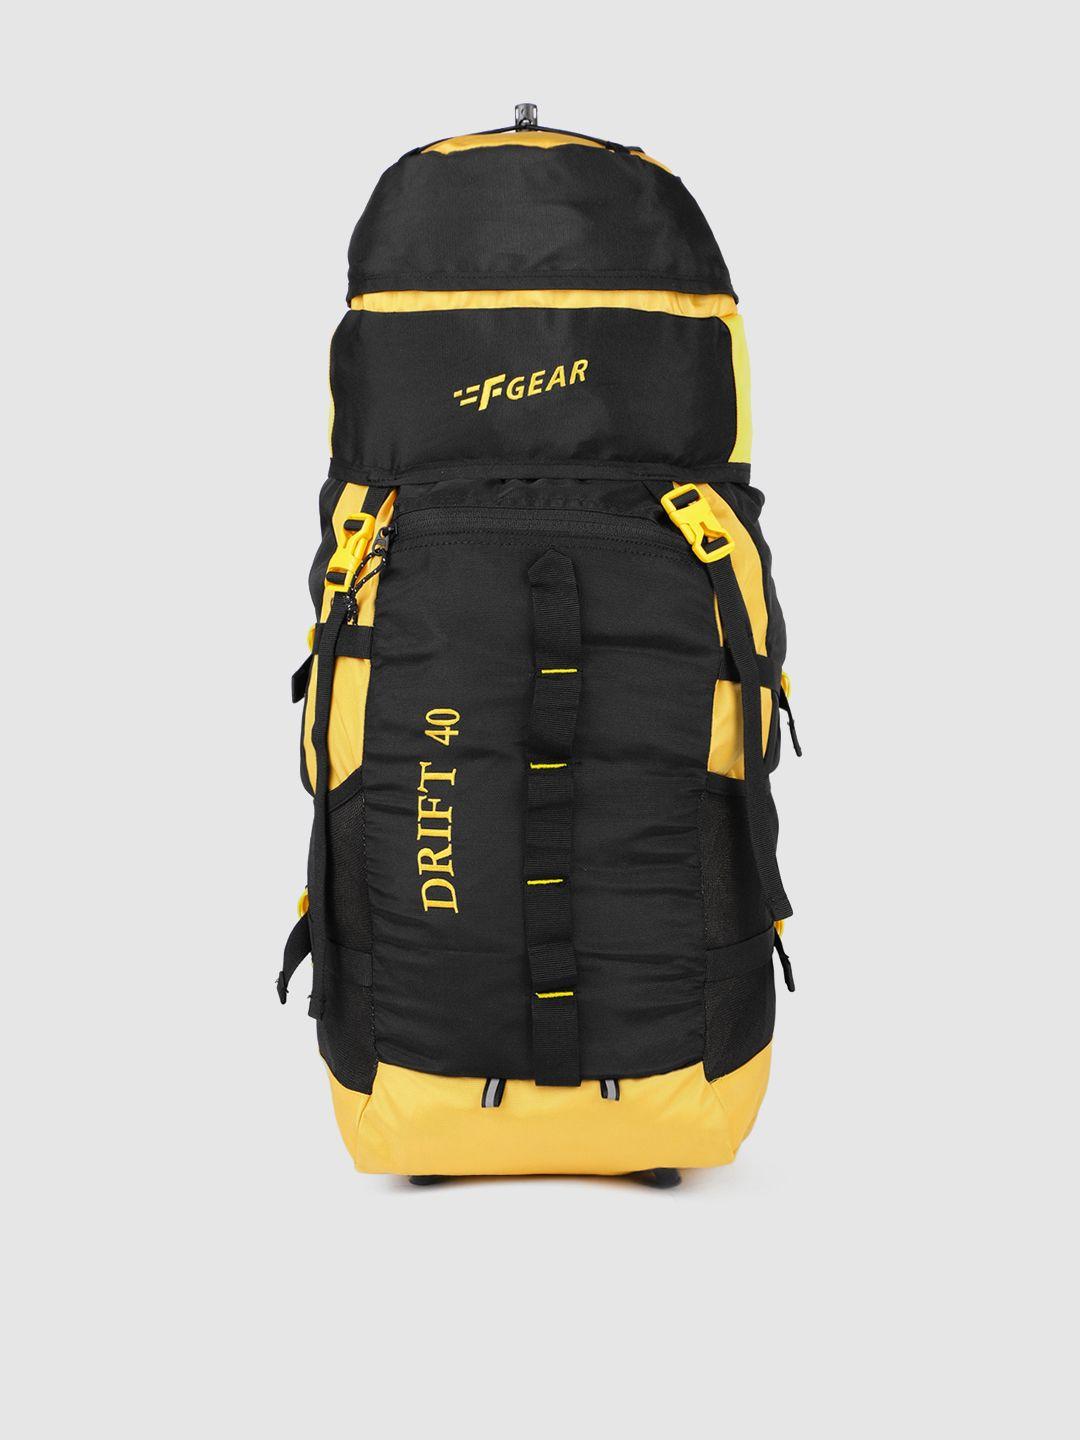 f gear unisex black & yellow drift 40 liter rucksack